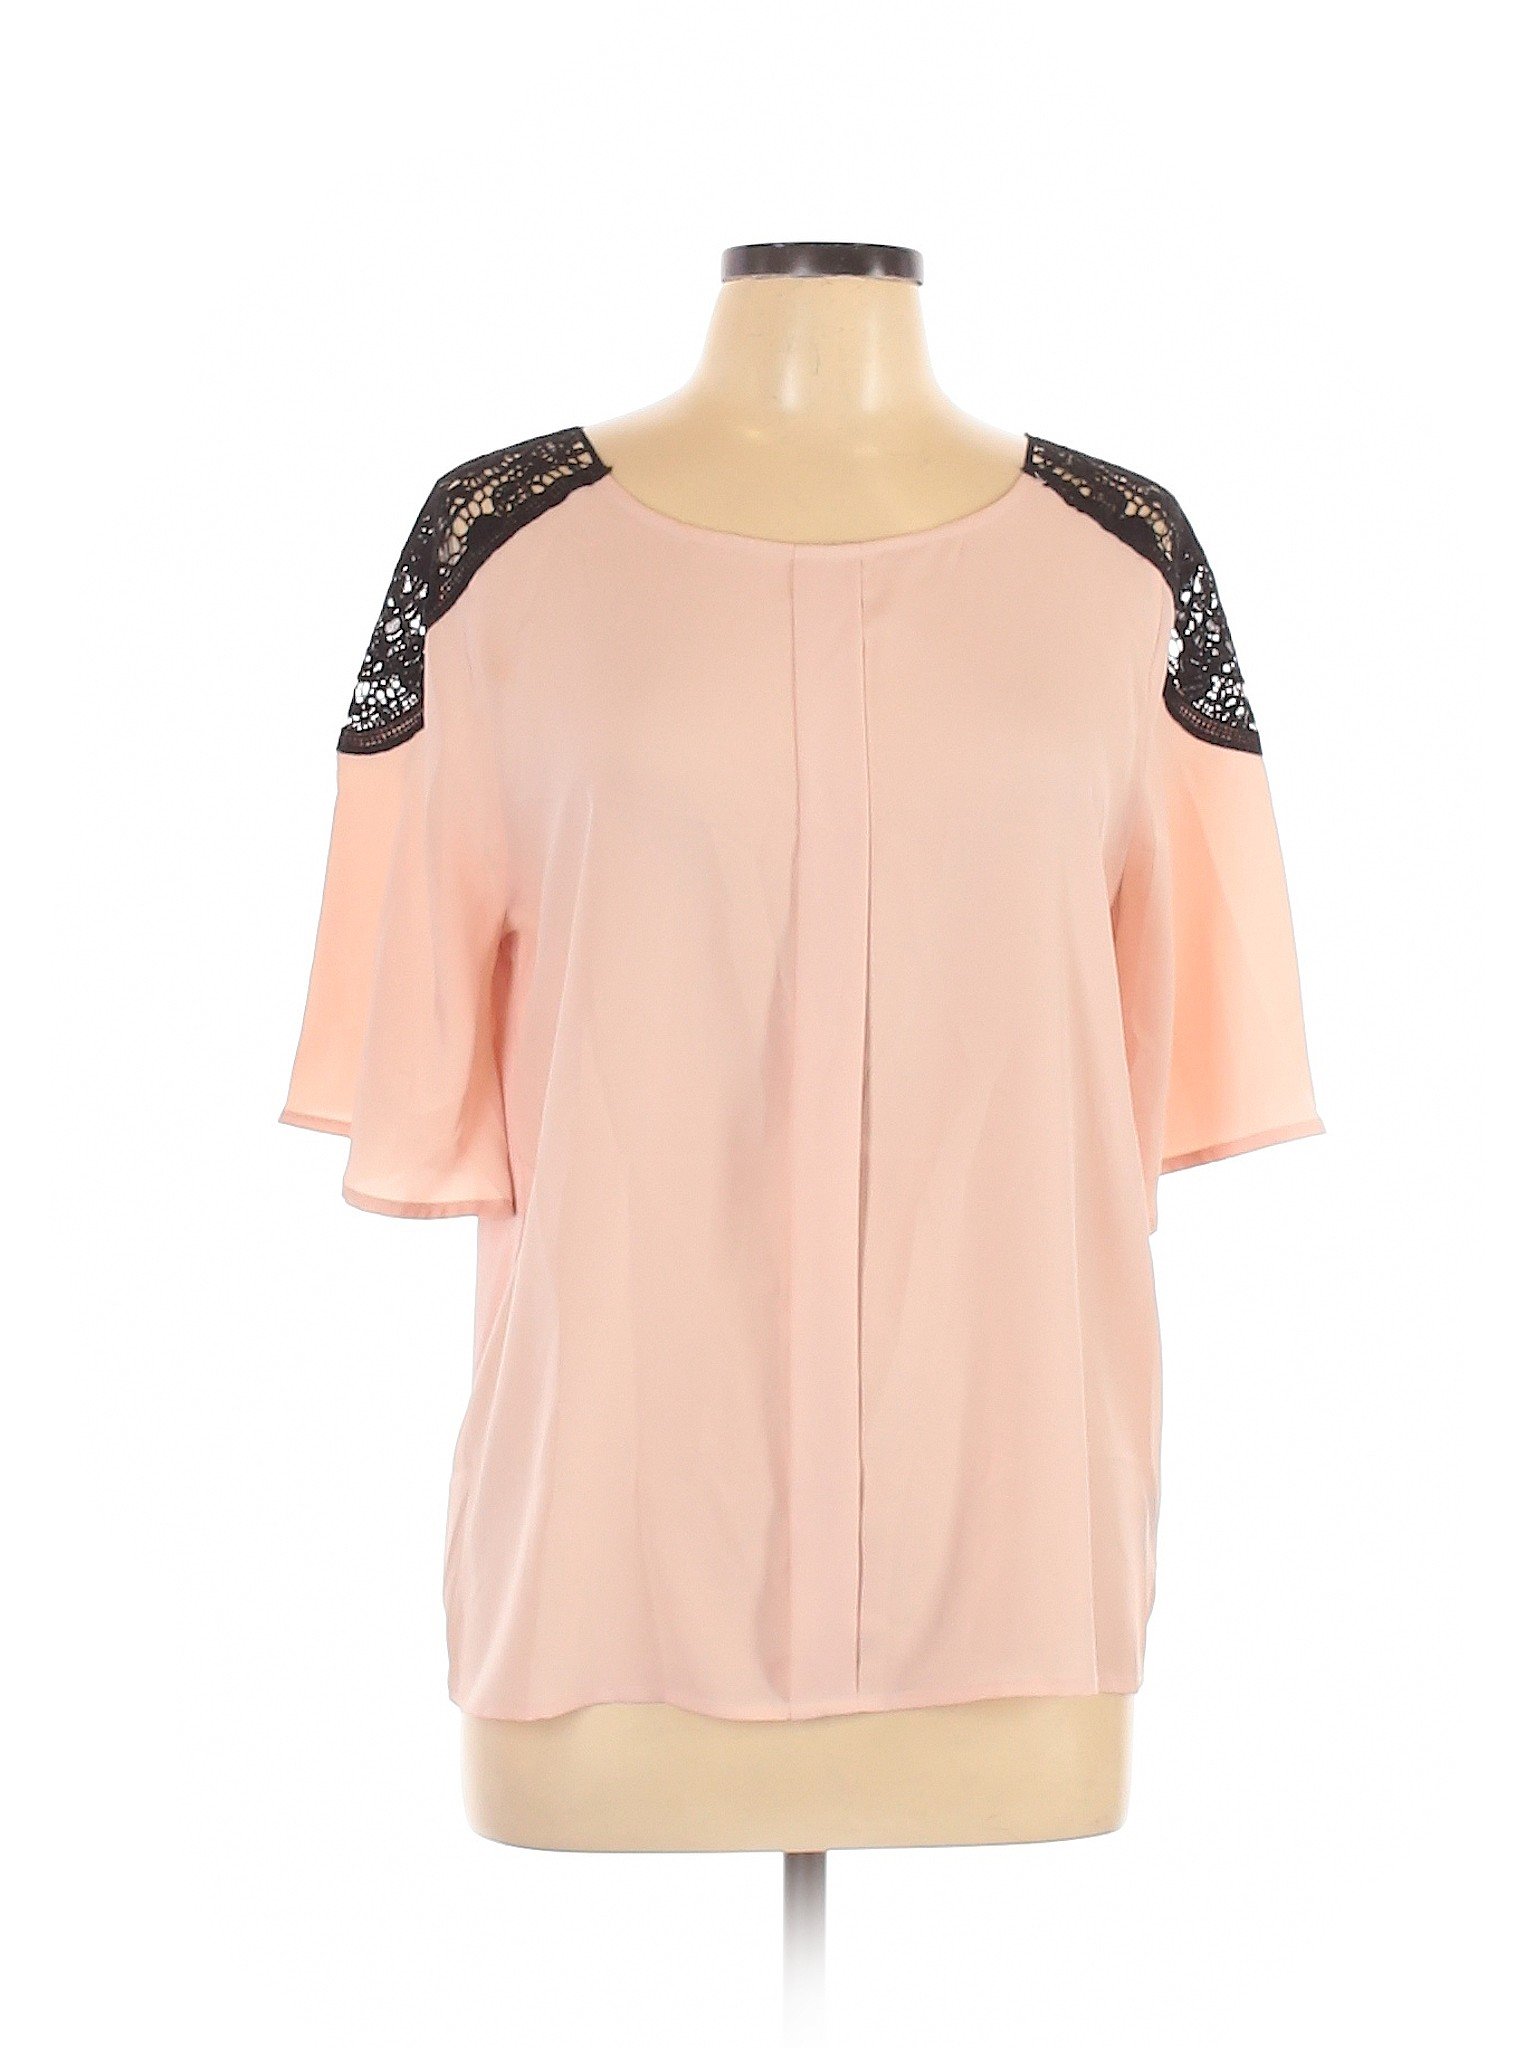 Worthington Women Pink Short Sleeve Blouse L | eBay